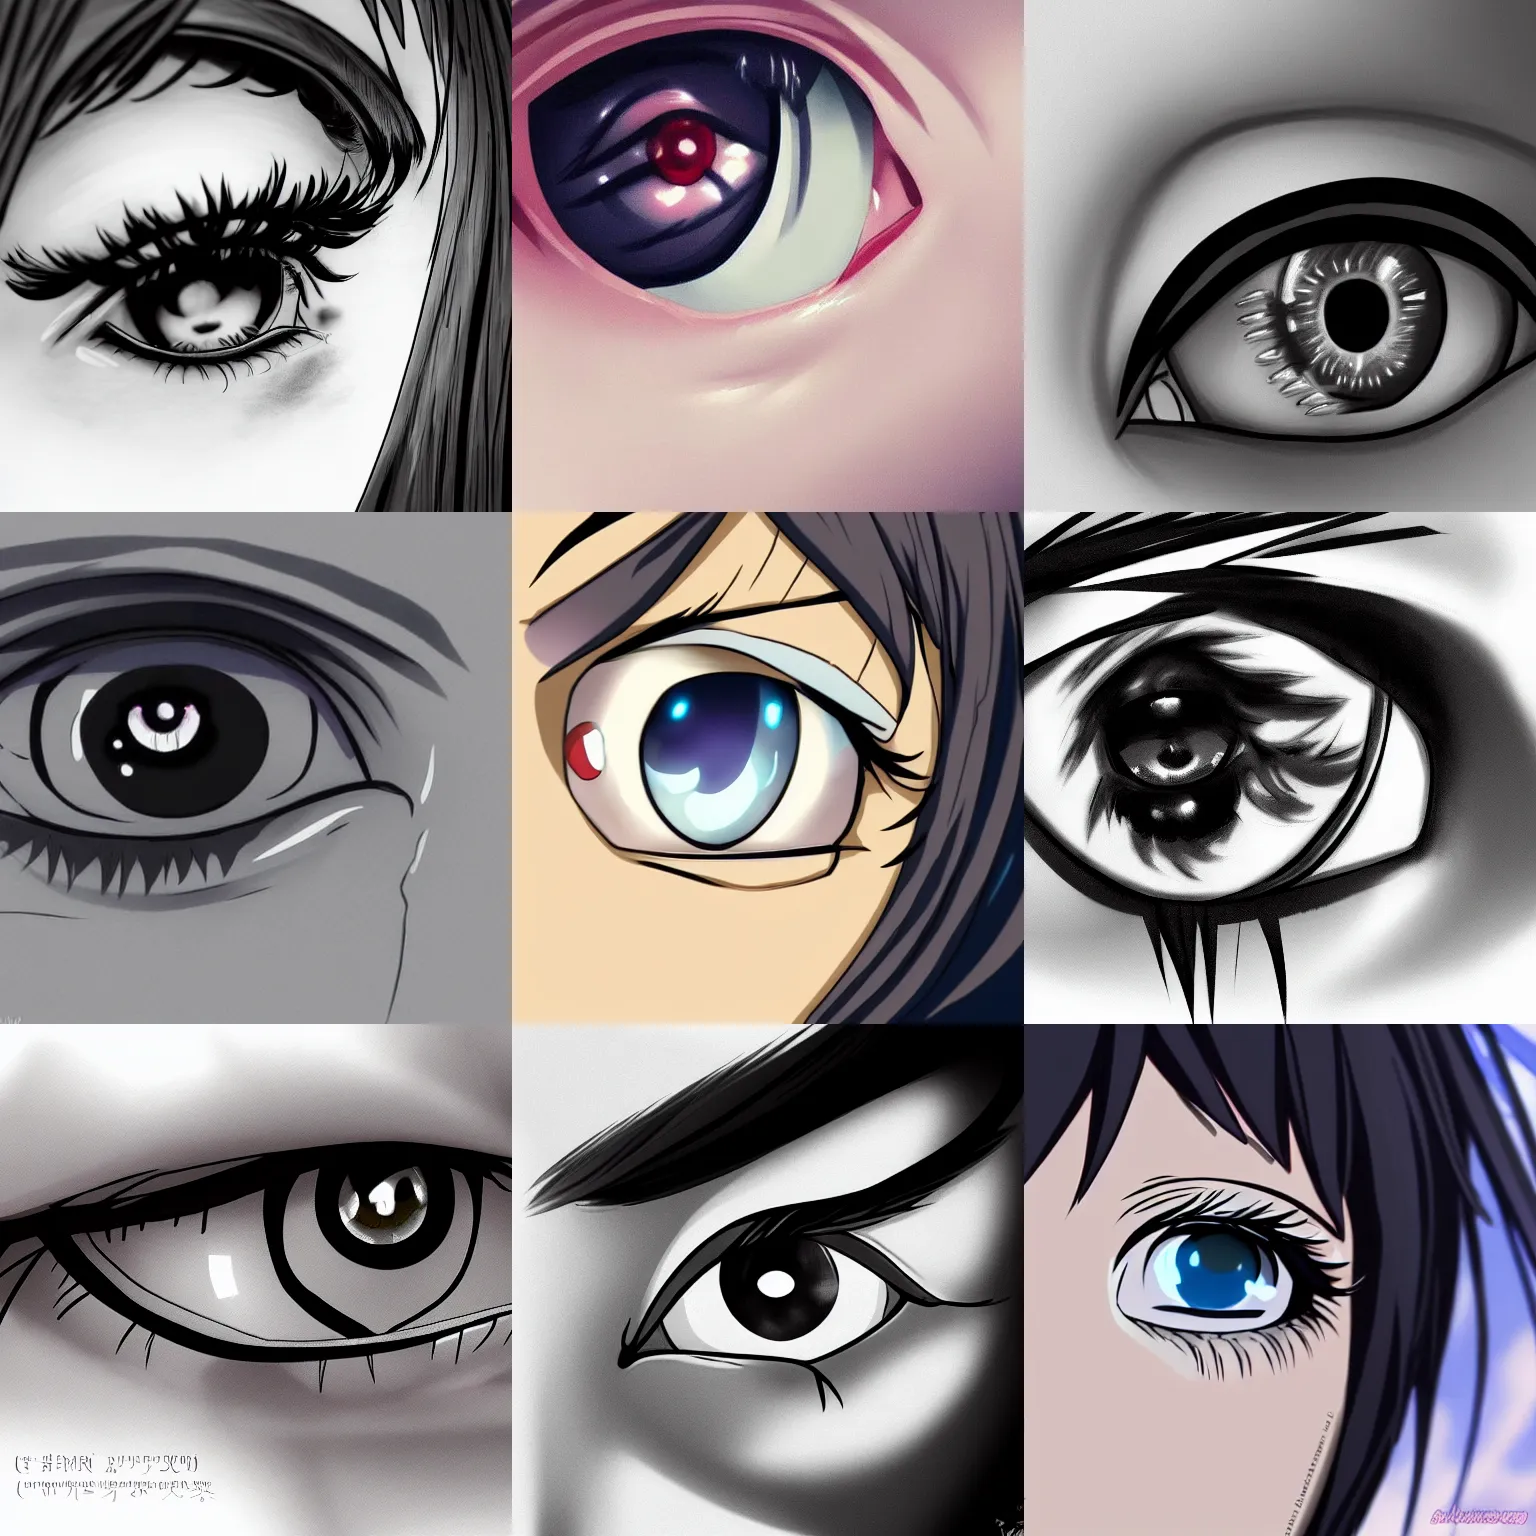 Anime Face Closeup On Black Background Web Banner For Anime Manga Cartoon  Stock Illustration - Download Image Now - iStock